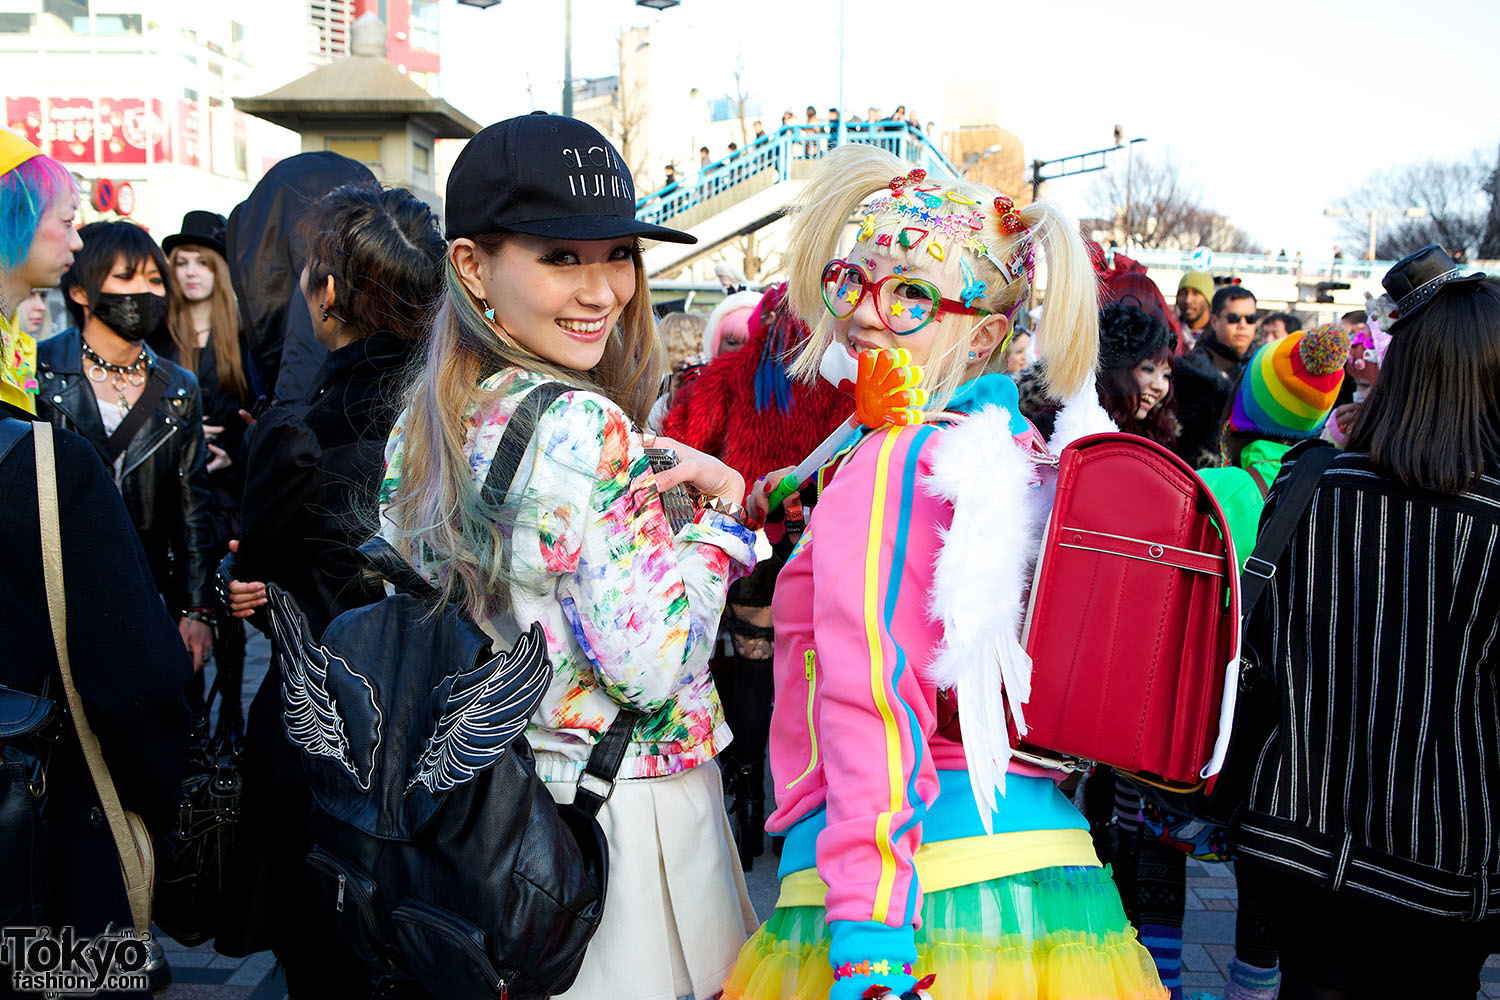 Harajuku Fashion Walk #15 – Kawaii Street Style Pictures & Video